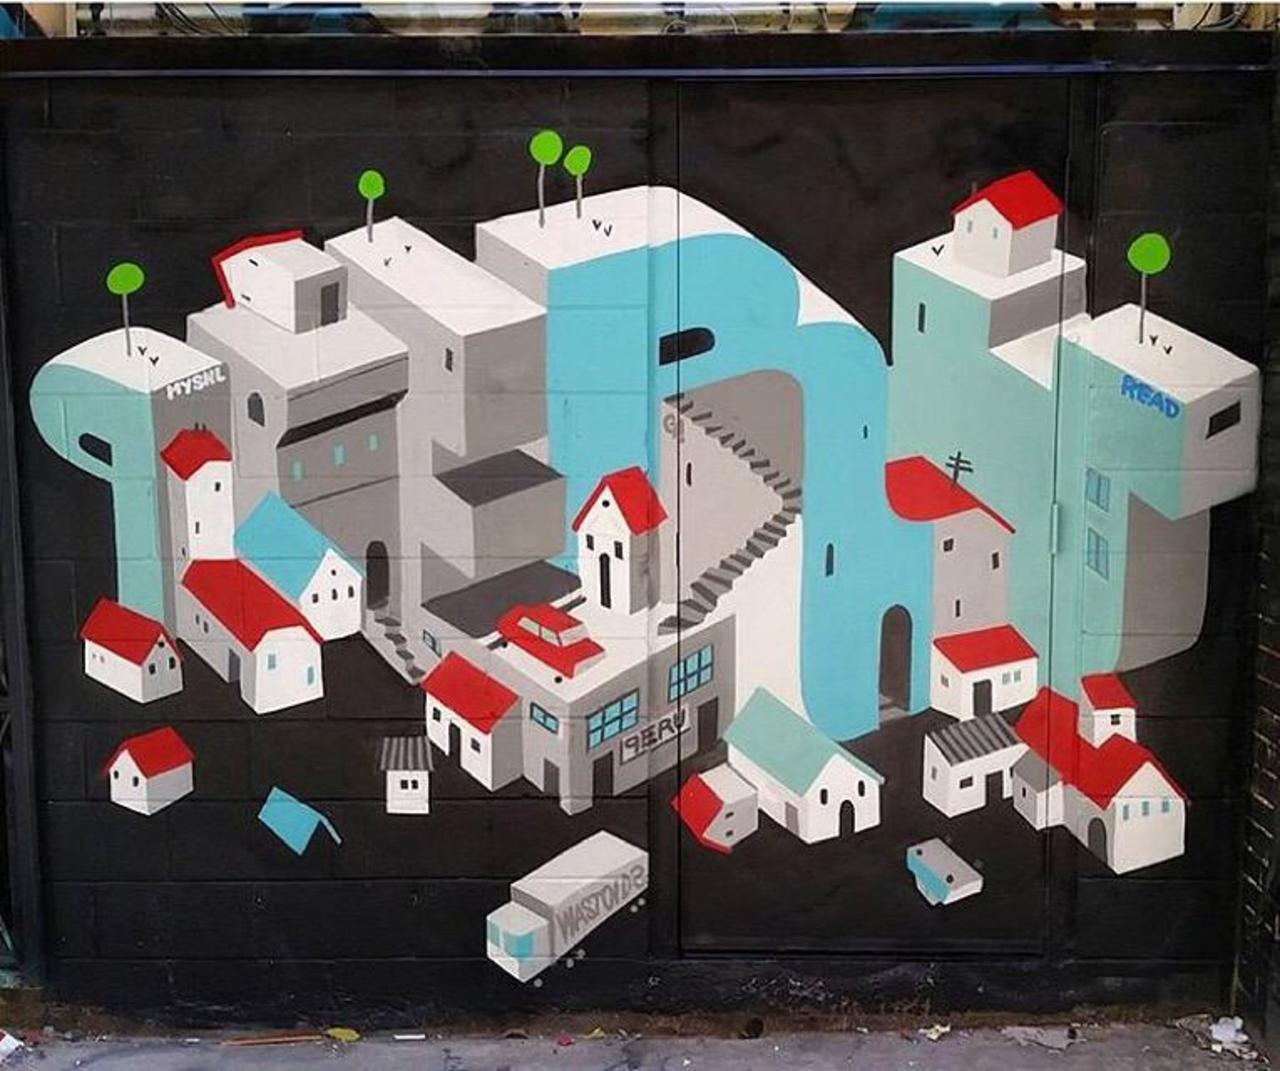 RT @bbbmagazine: Funky fresh lettering in Montreal by #graffiti artist Peru Dyer. #perudyer #streetart http://t.co/S1ZWFvJsAX